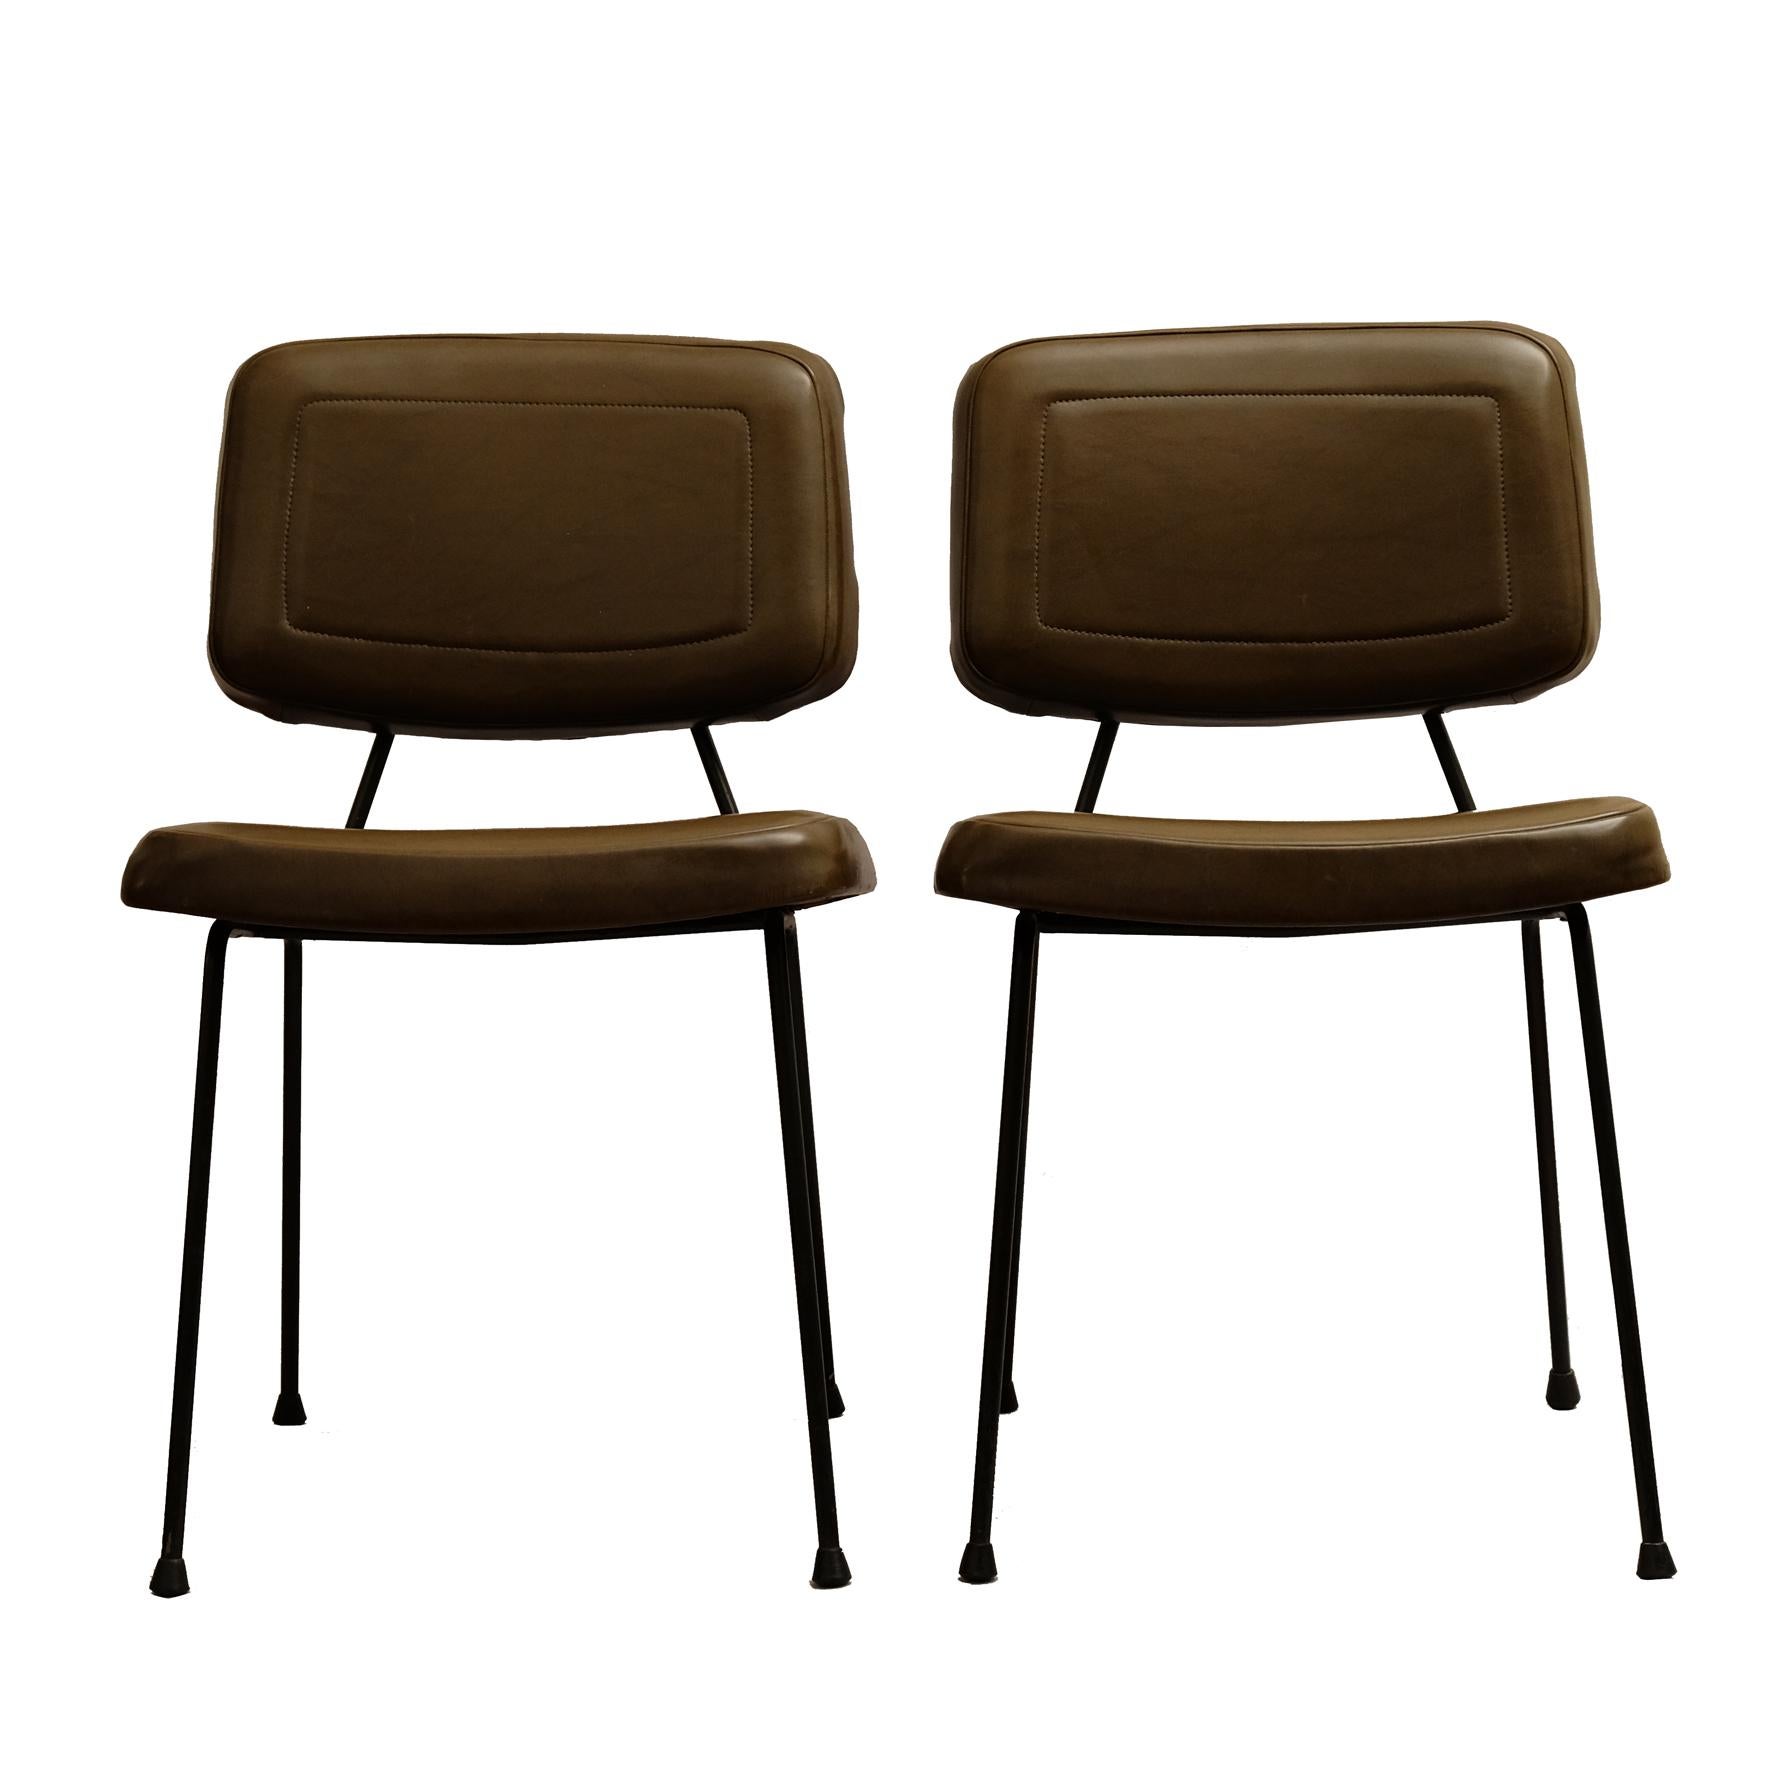 Modern Pierre Paulin, a Pair of Chairs, Model CM 196, Thonet, 1960s